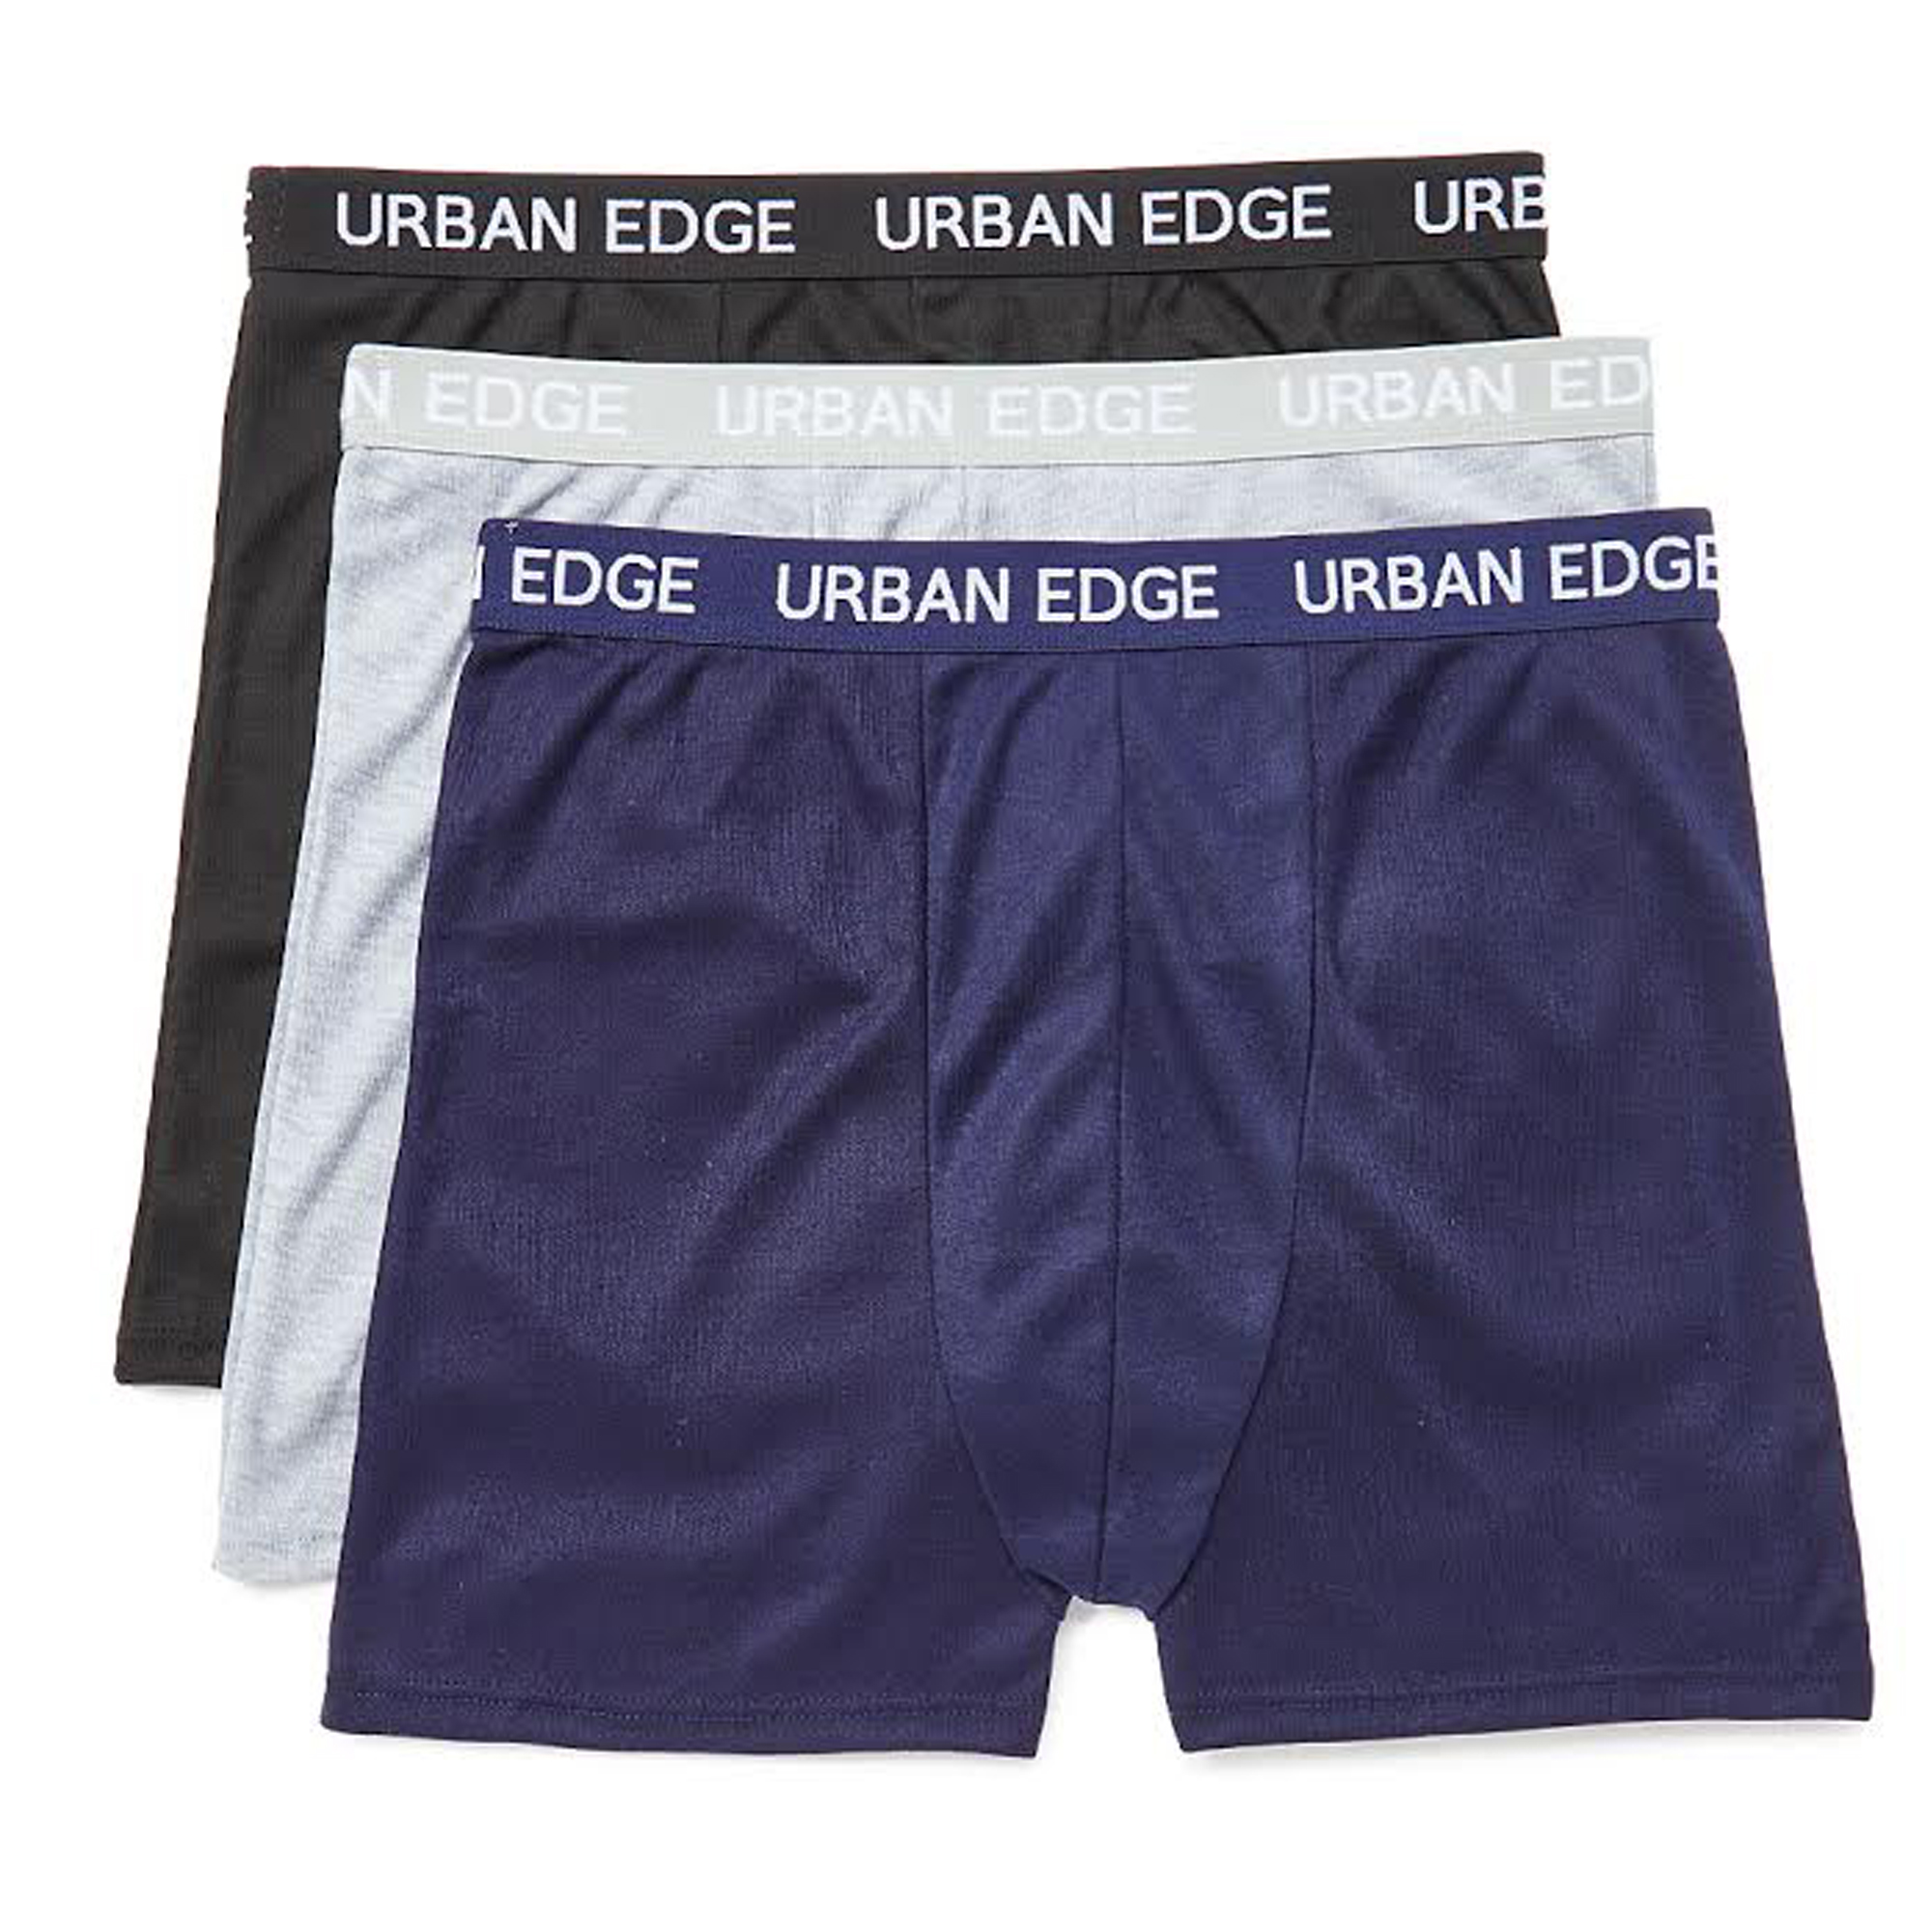 Men\'s Solid Colored Urban Edge Boxer Briefs - Sizes Medium-2XL - 3 Pack